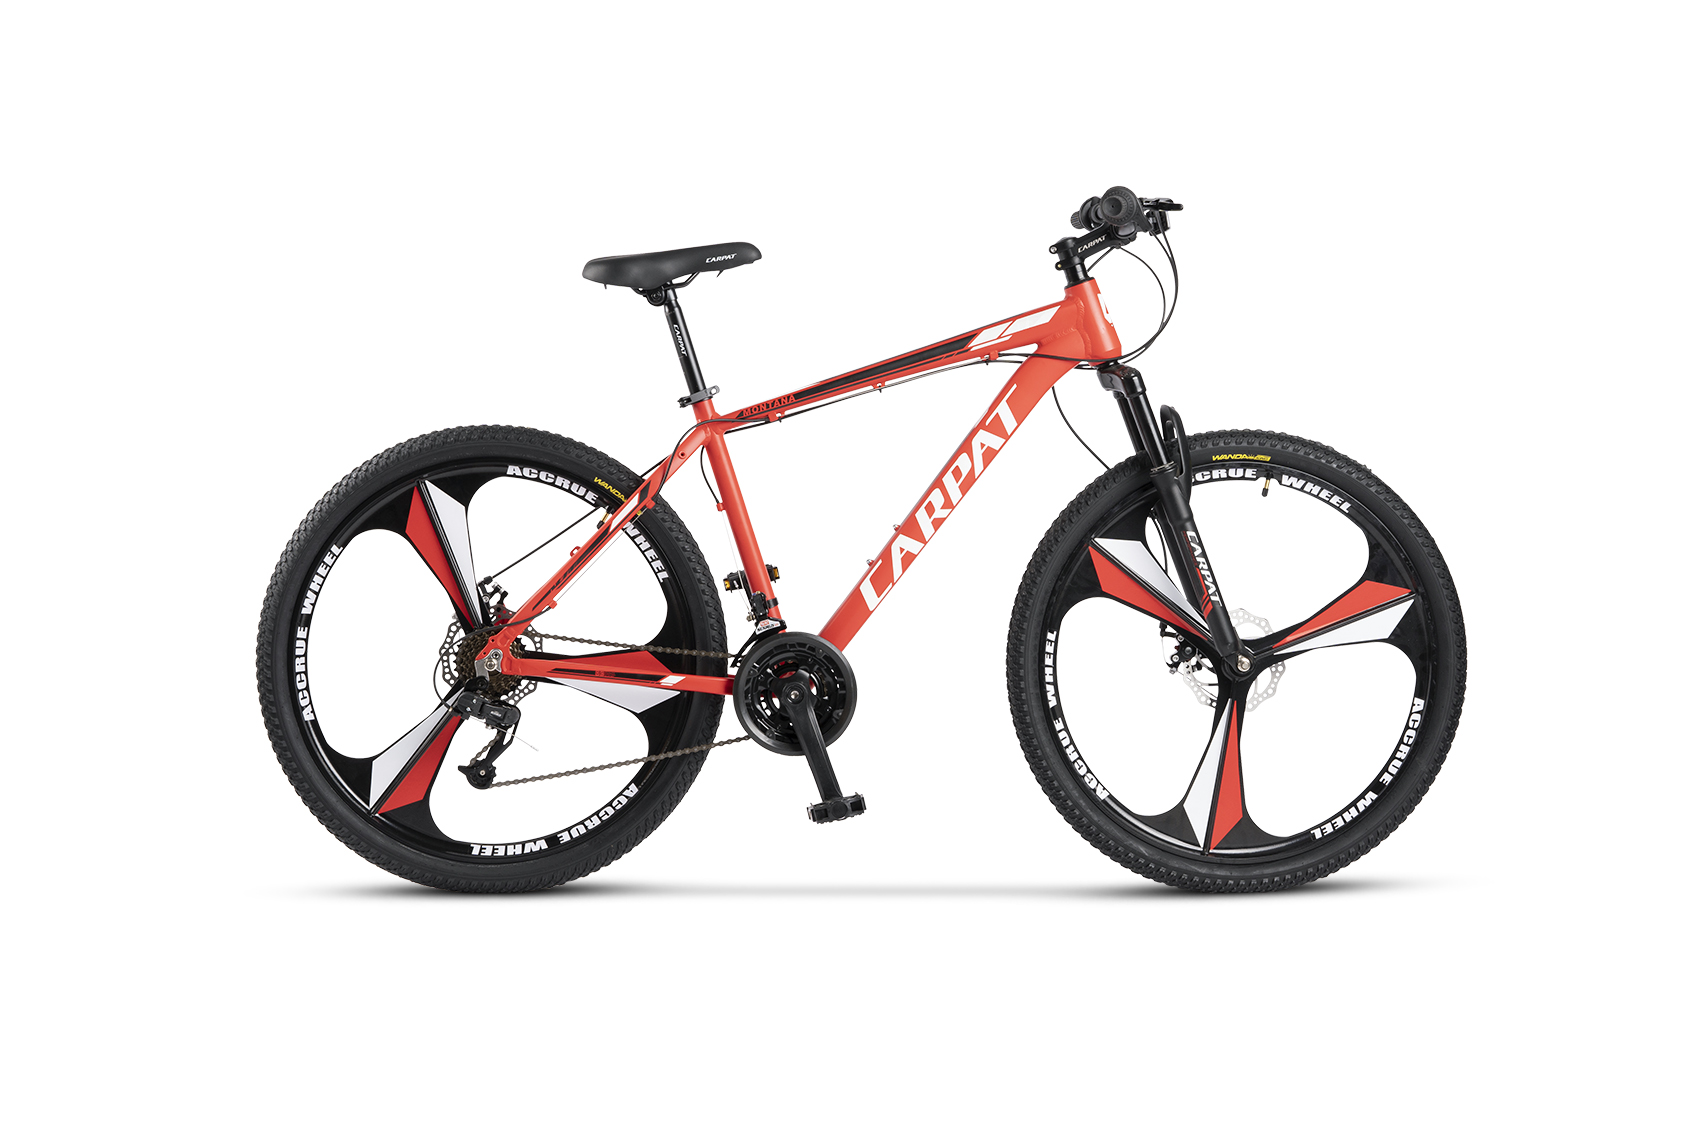 PROMO BICICLETE - Bicicleta MTB-HT Carpat C2799M 27.5", Rosu/Alb/Negru - RESIGILATA, https:carpatsport.ro